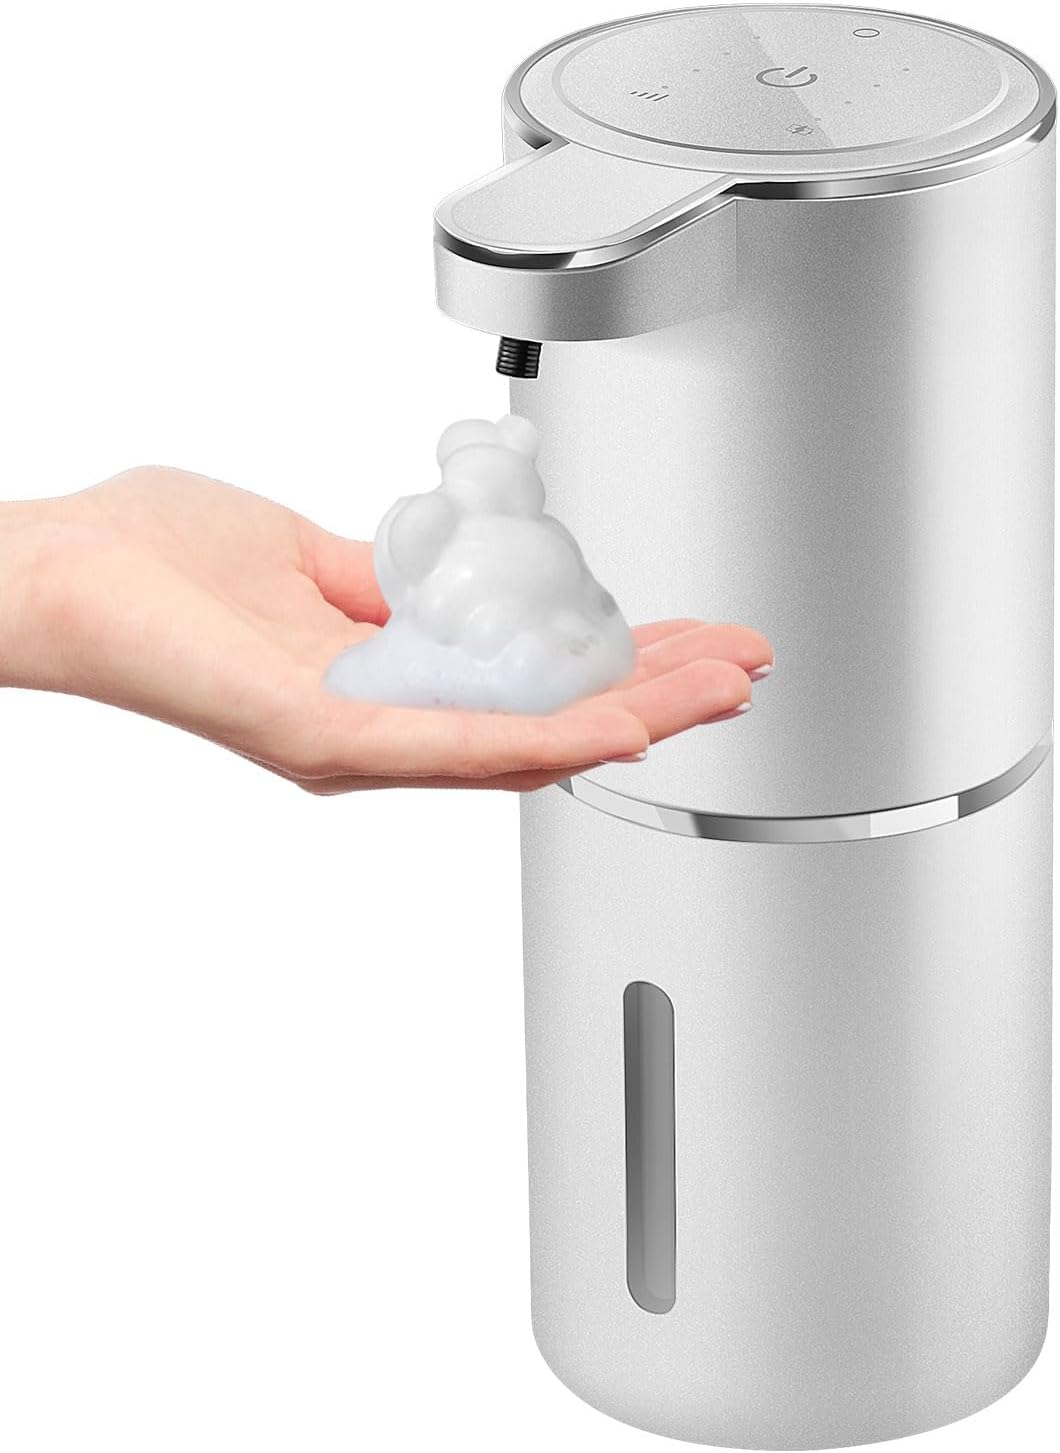 Gotofine Automatic Foaming Soap Dispenser,4-Level Adjustable Foam, Wall Mount Soap Dispenser,USB Rechargeable,12.8oz/ 380ml,Touchless Hand & Dish Soap Dispenser for Bathroom, Kitchen,Hotel, Restaurant